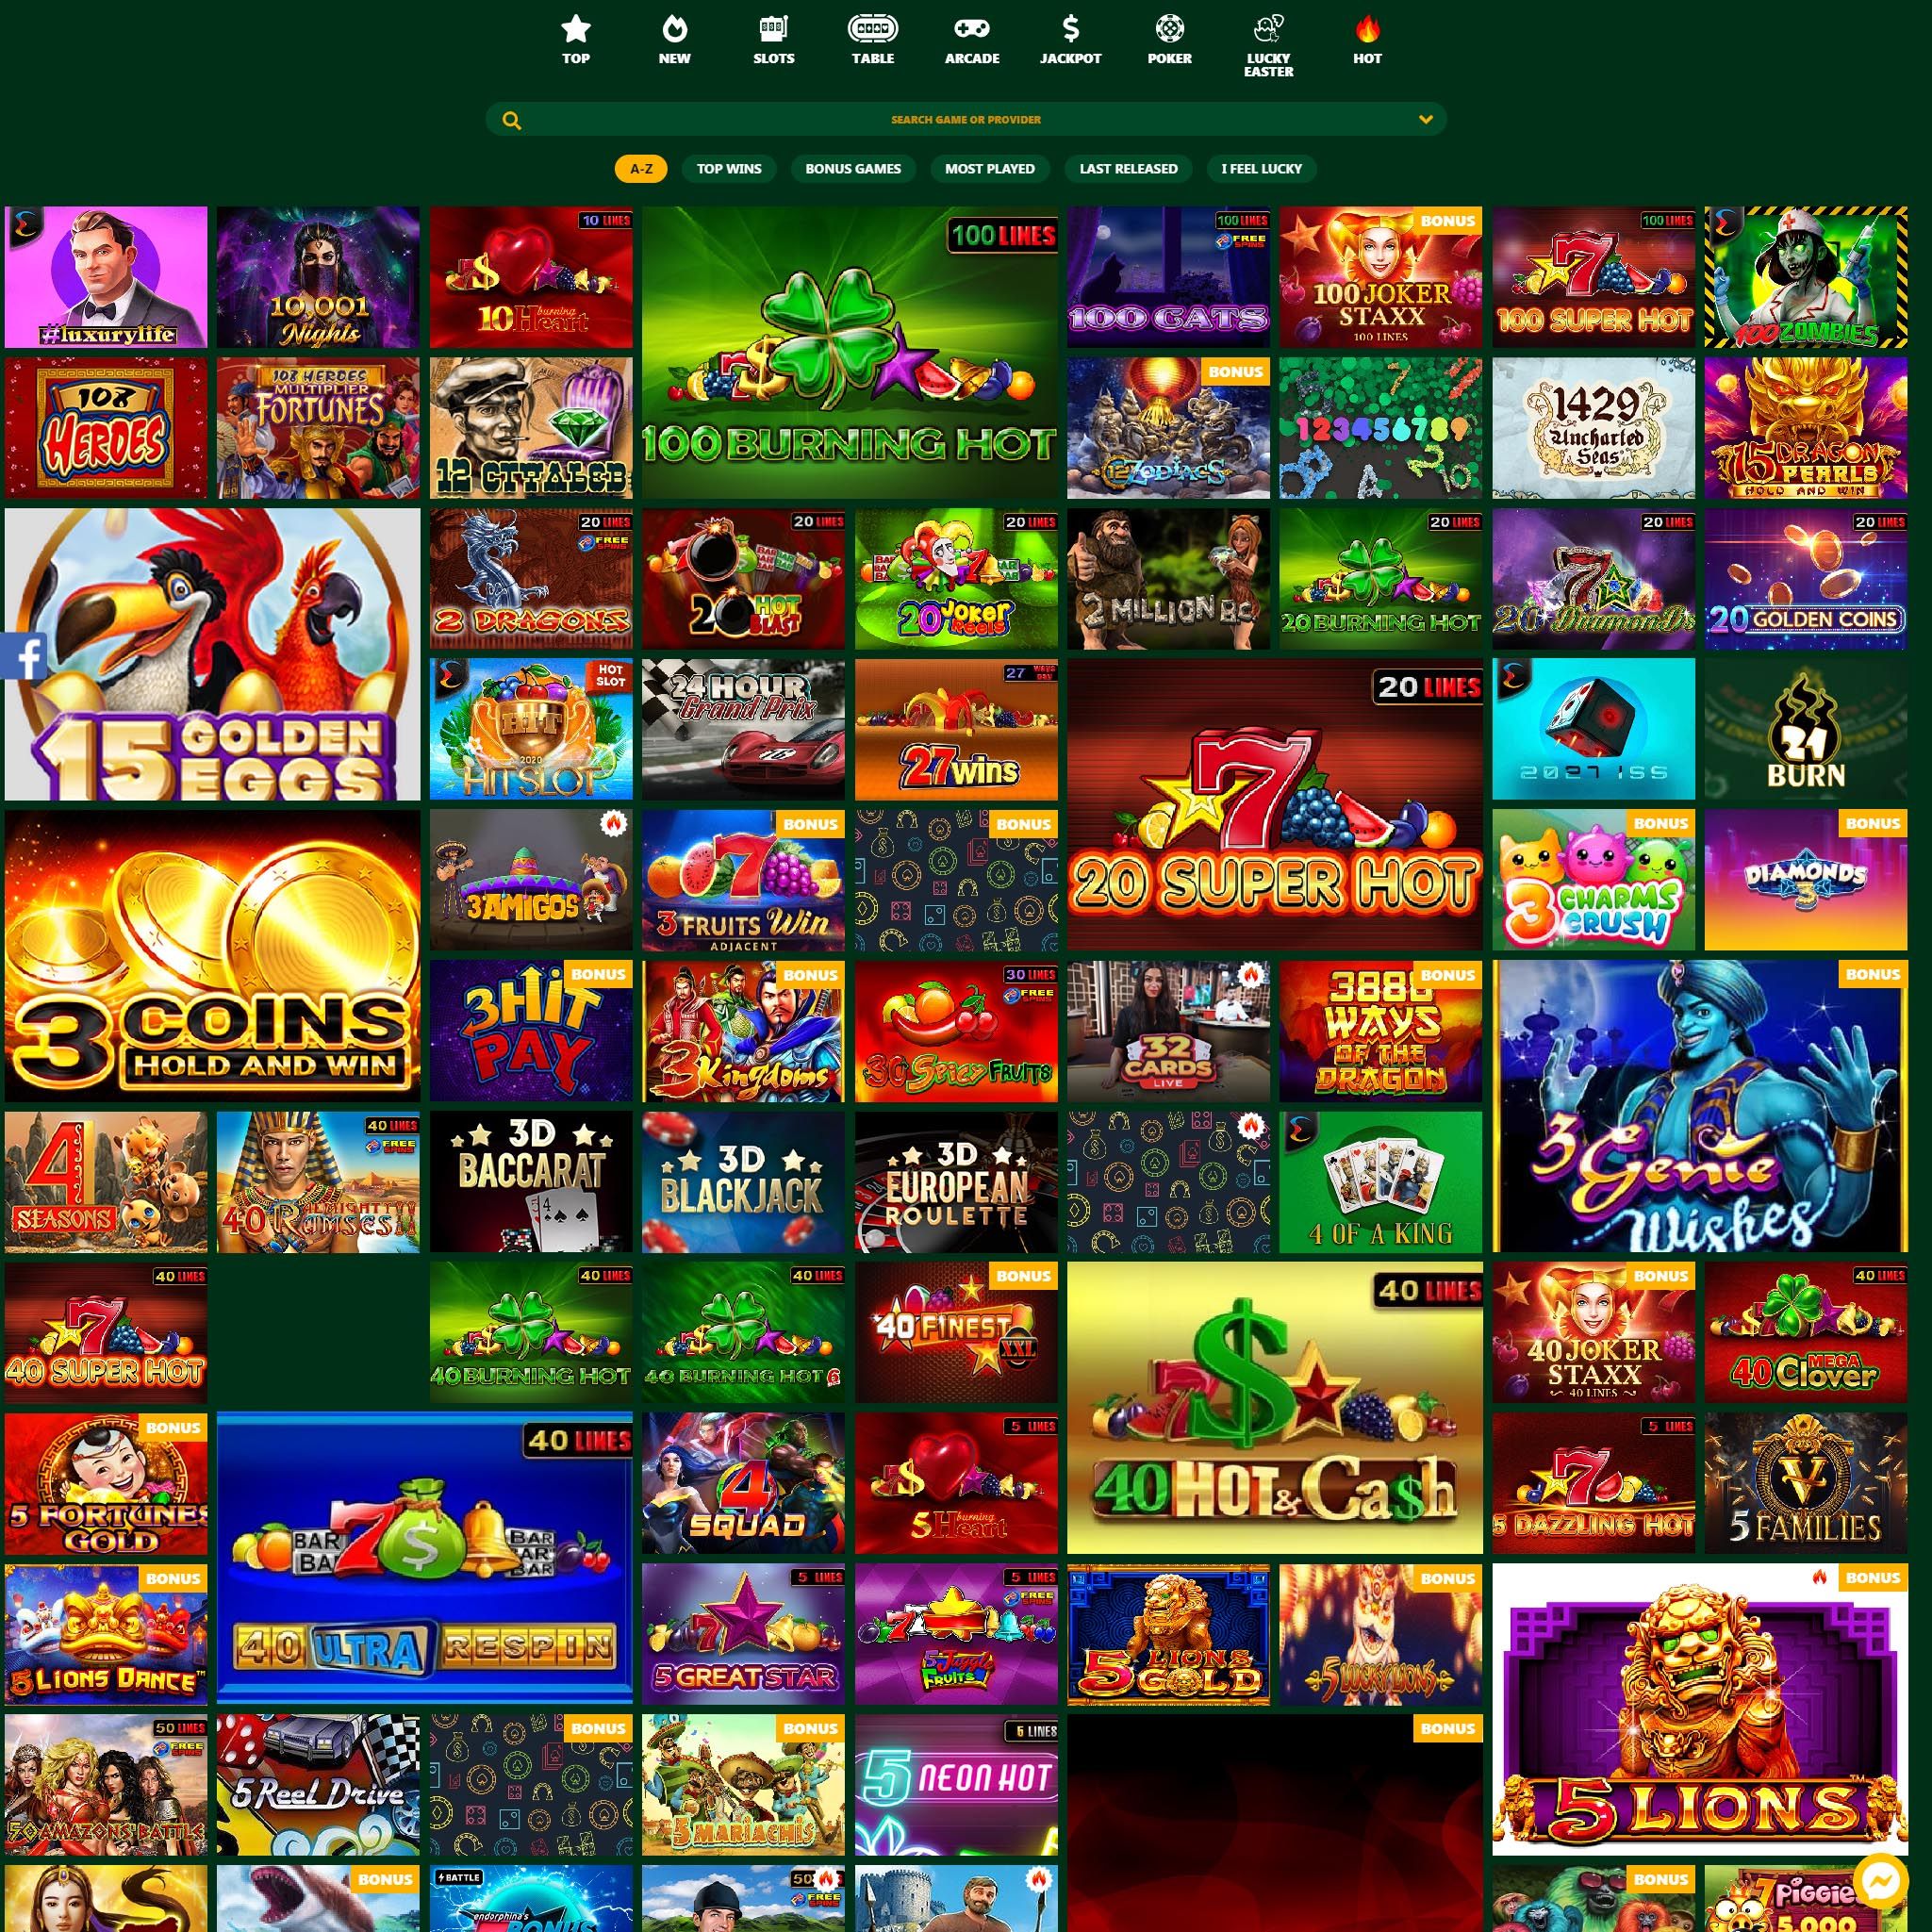 1mybet Casino full games catalogue